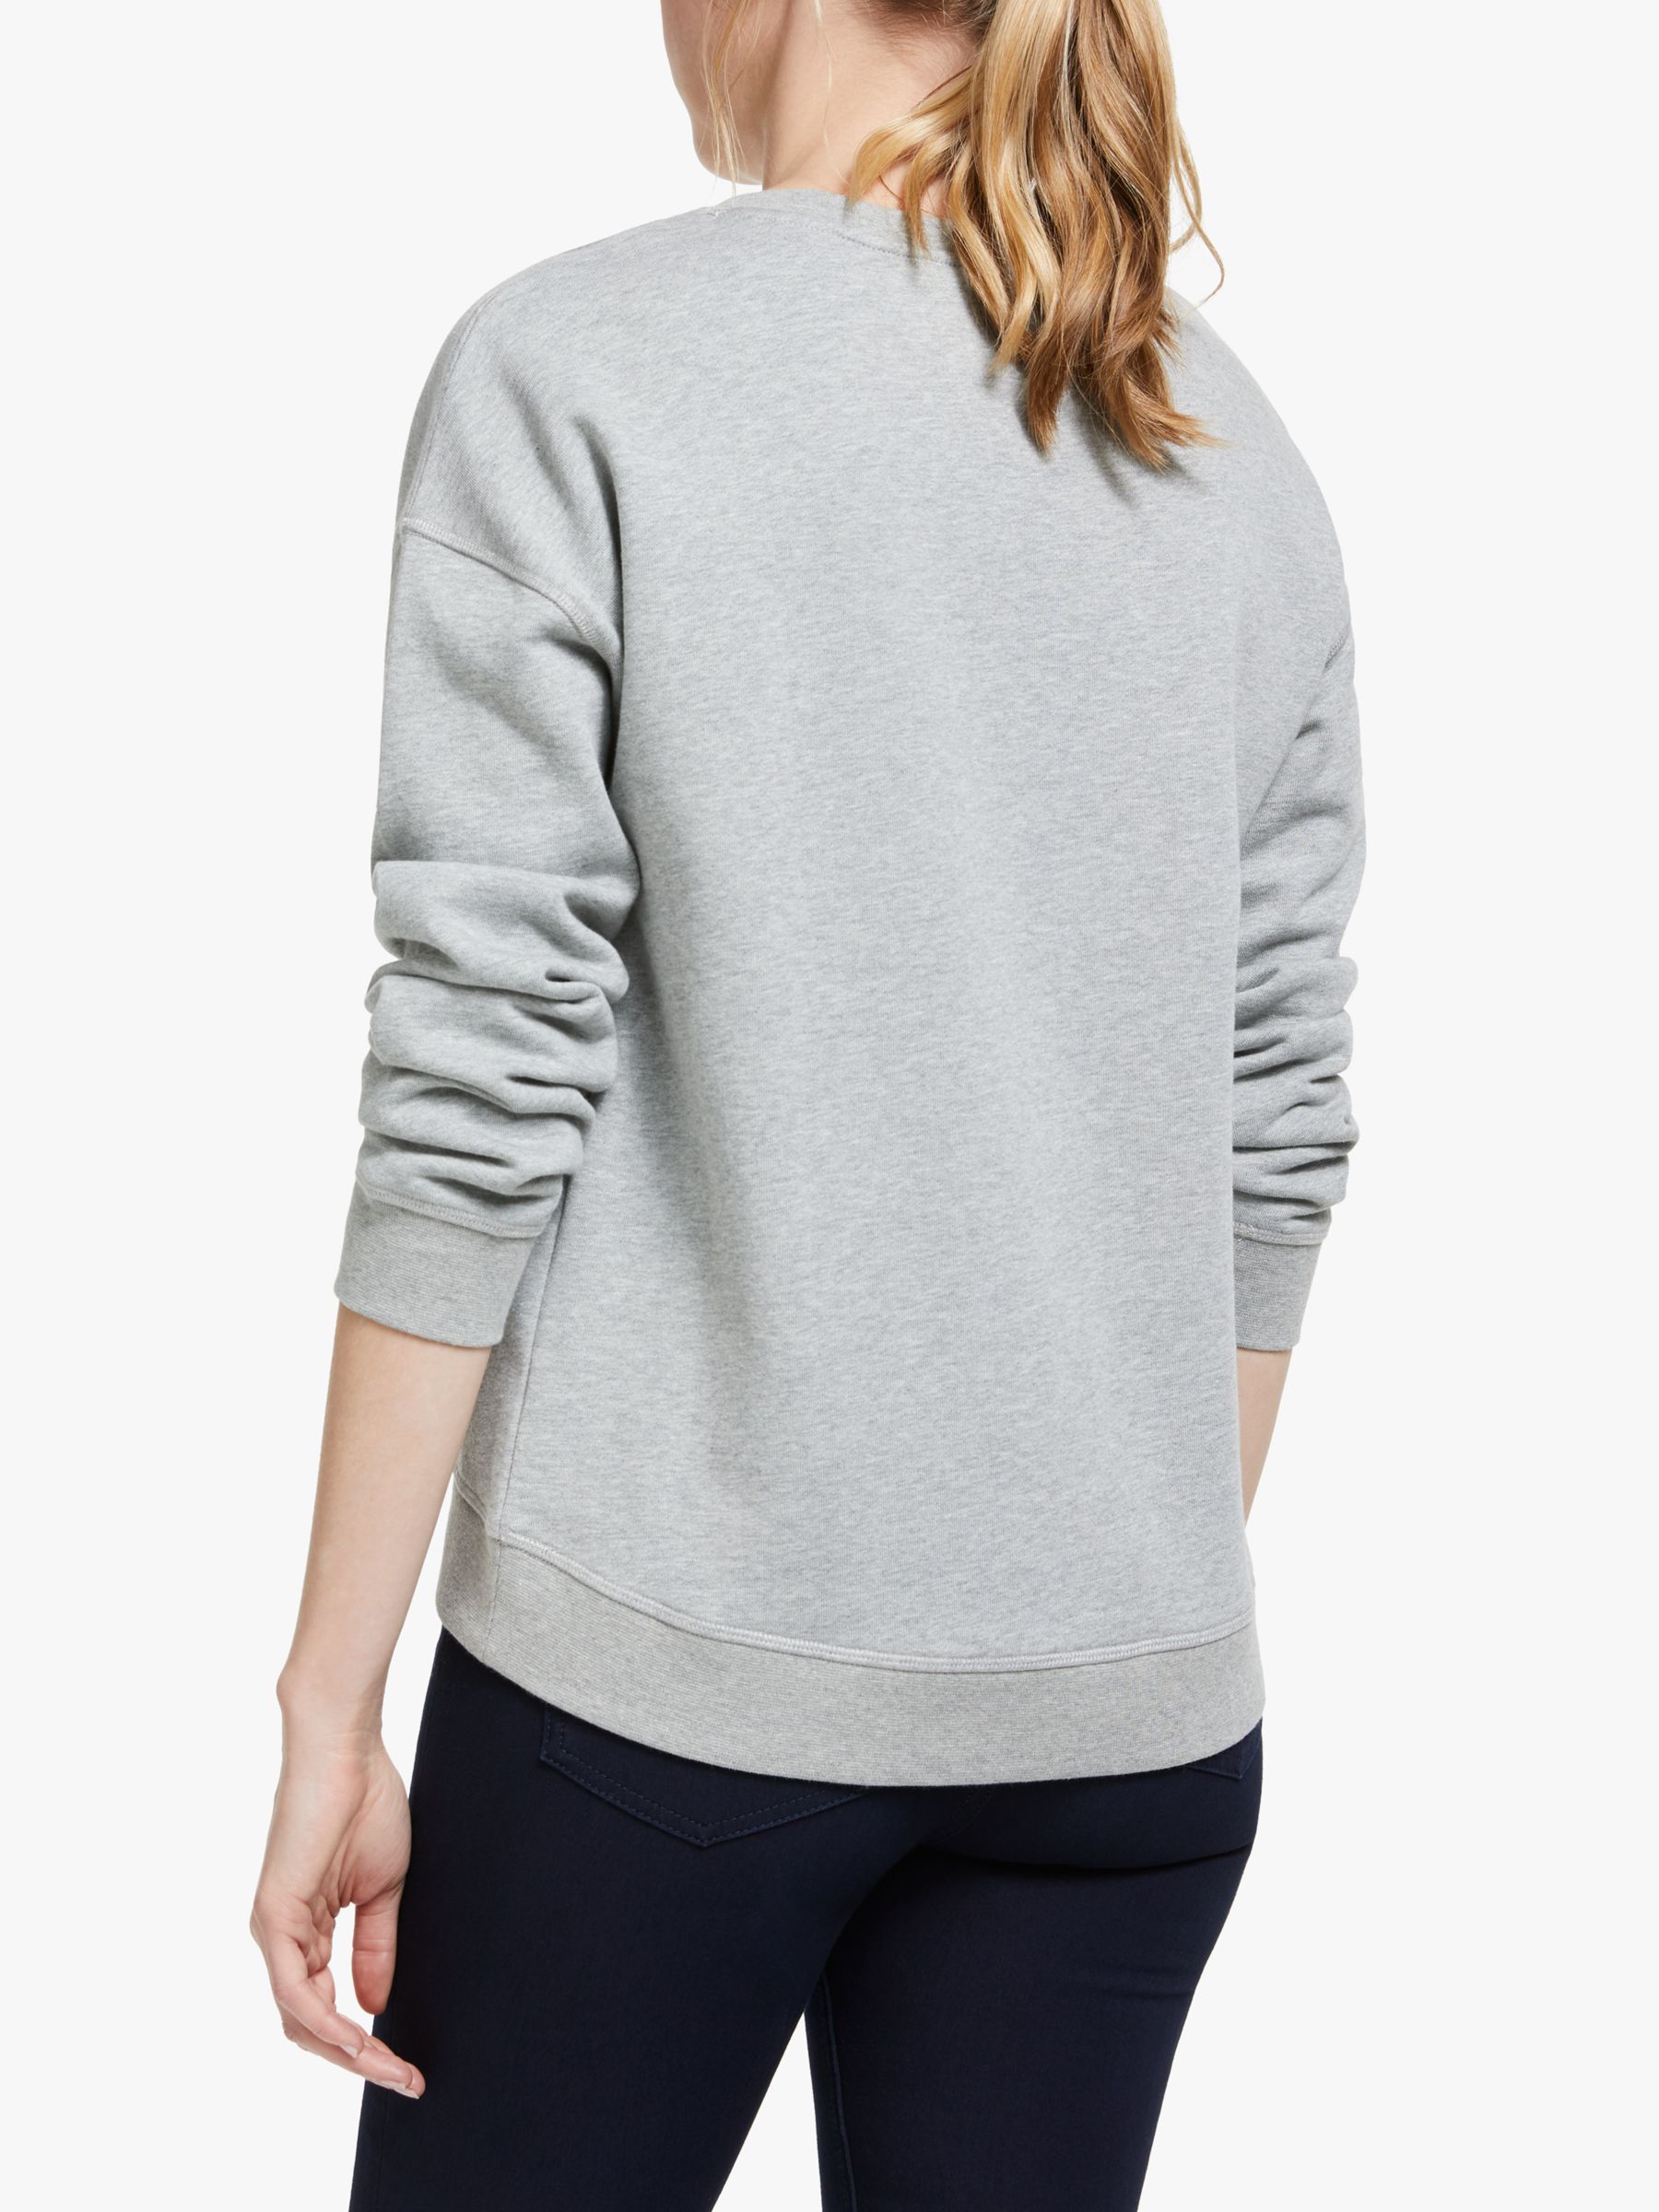 Boden Arabella Wonderful Sweatshirt, Grey at John Lewis & Partners